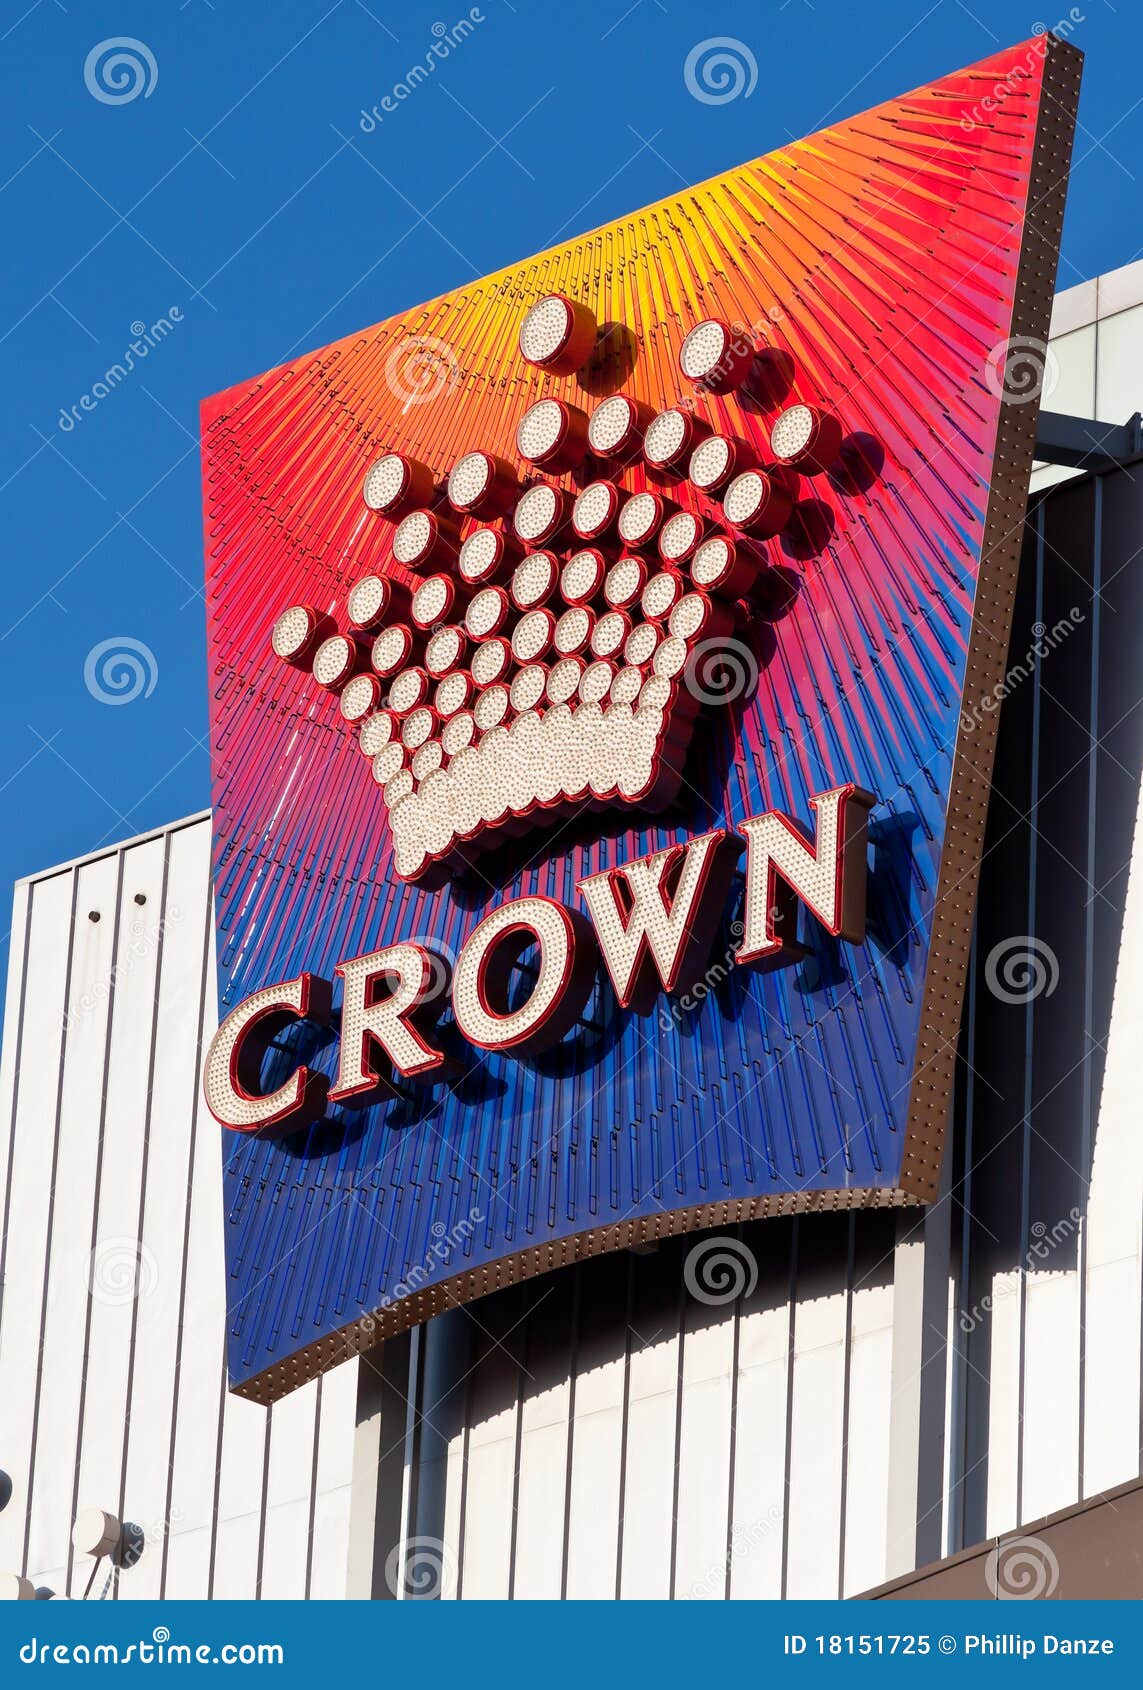 Crown Melbourne Logo